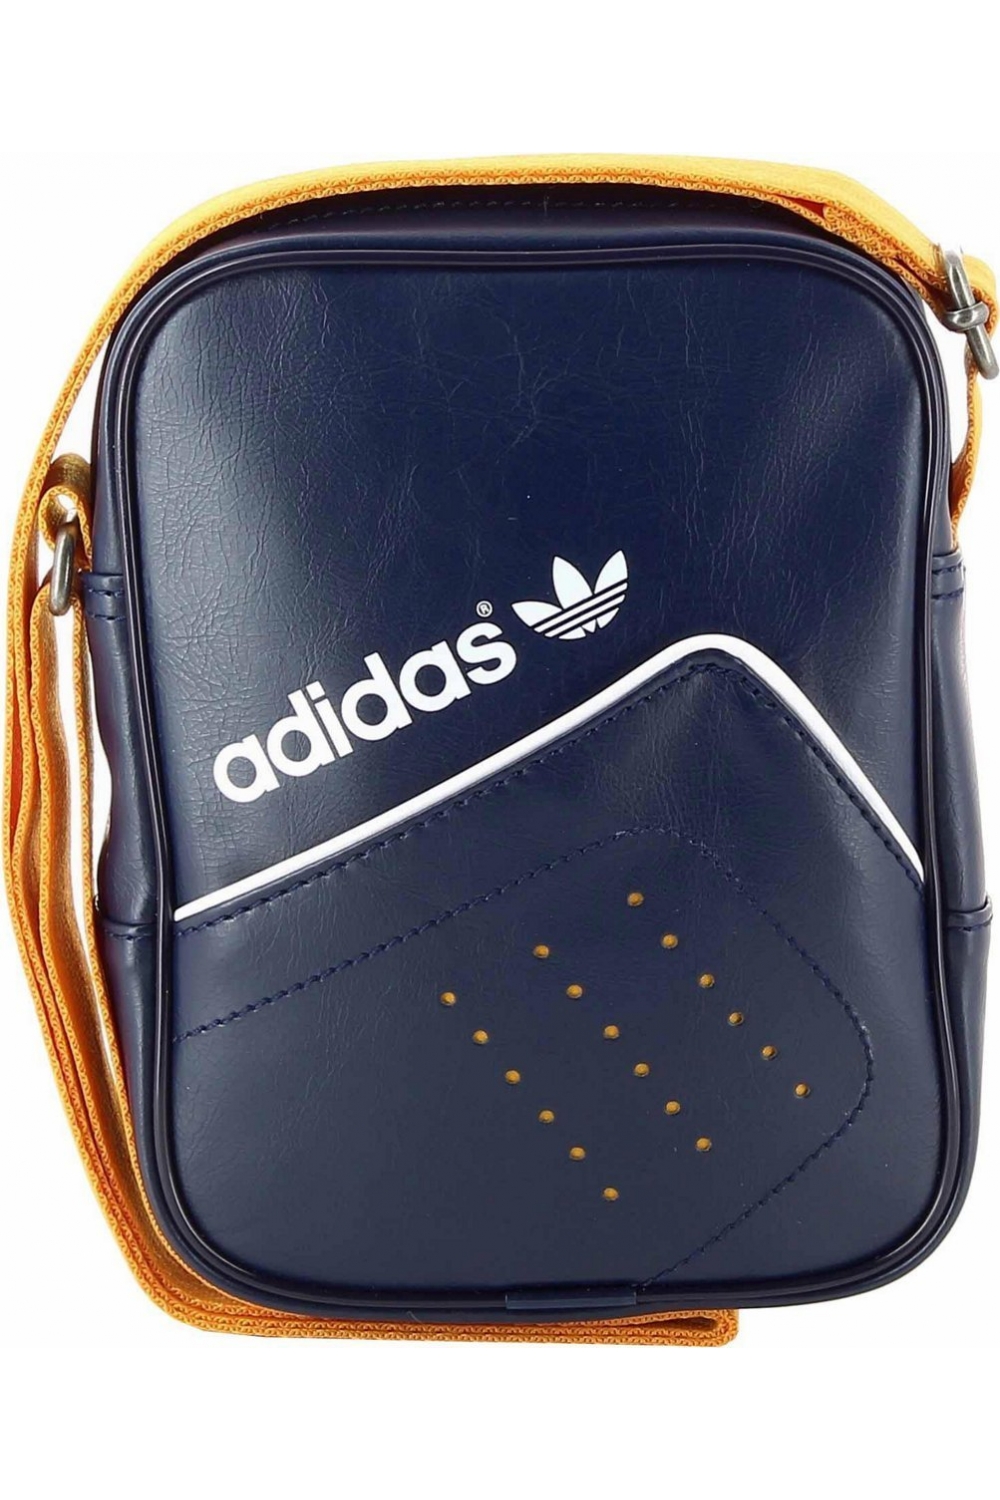 Adidas Originals Mini Bag Perforated